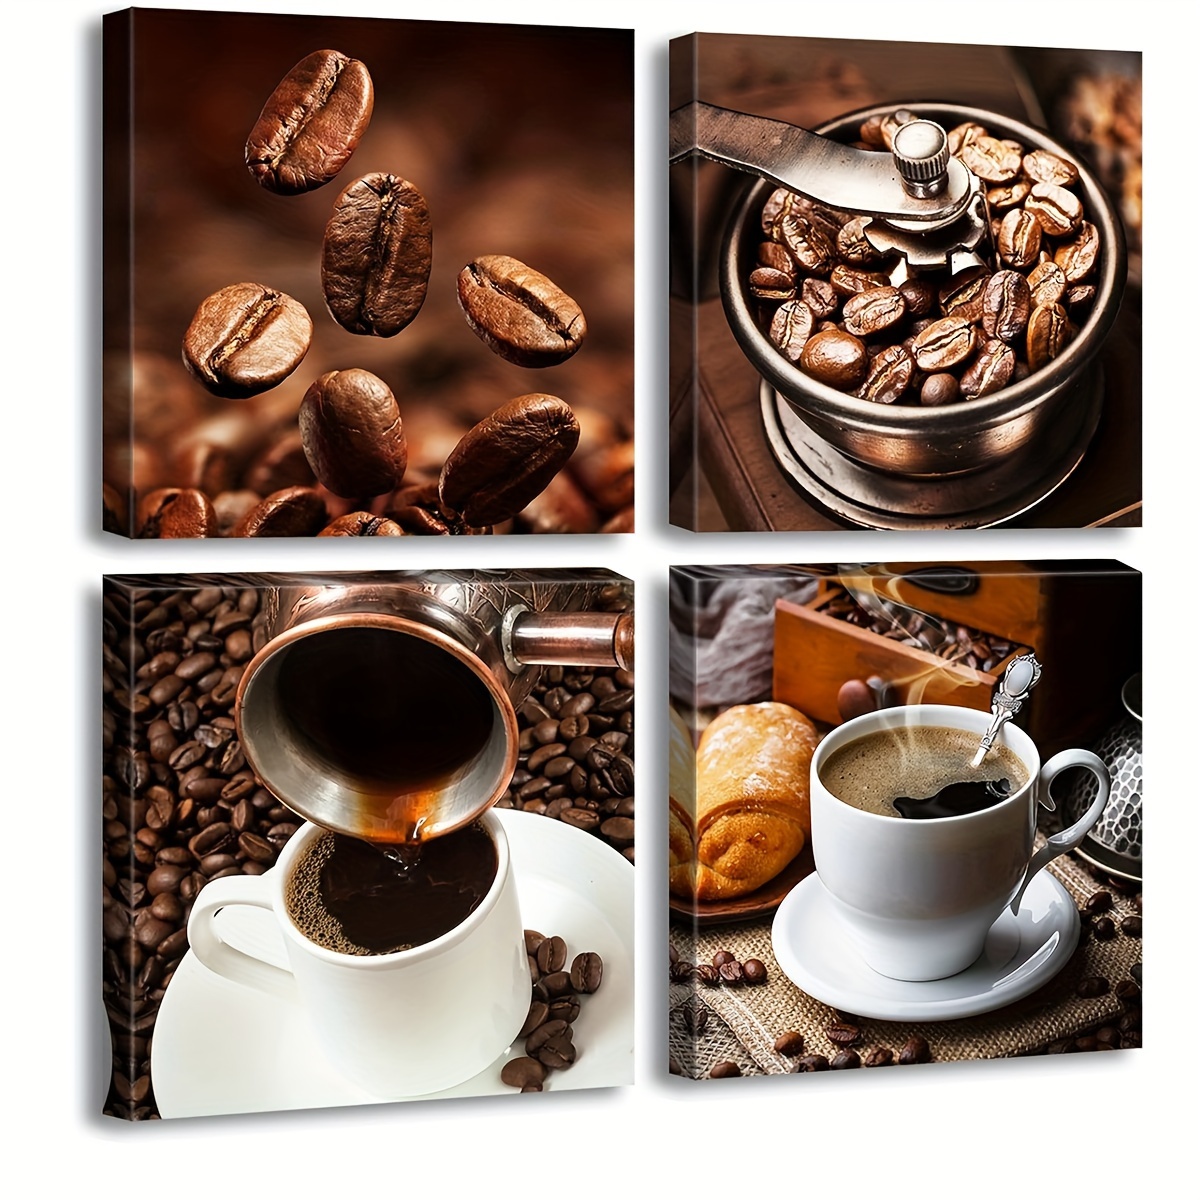 Juego de tazas abejas ¡para café expreso, café moca o chocolate!